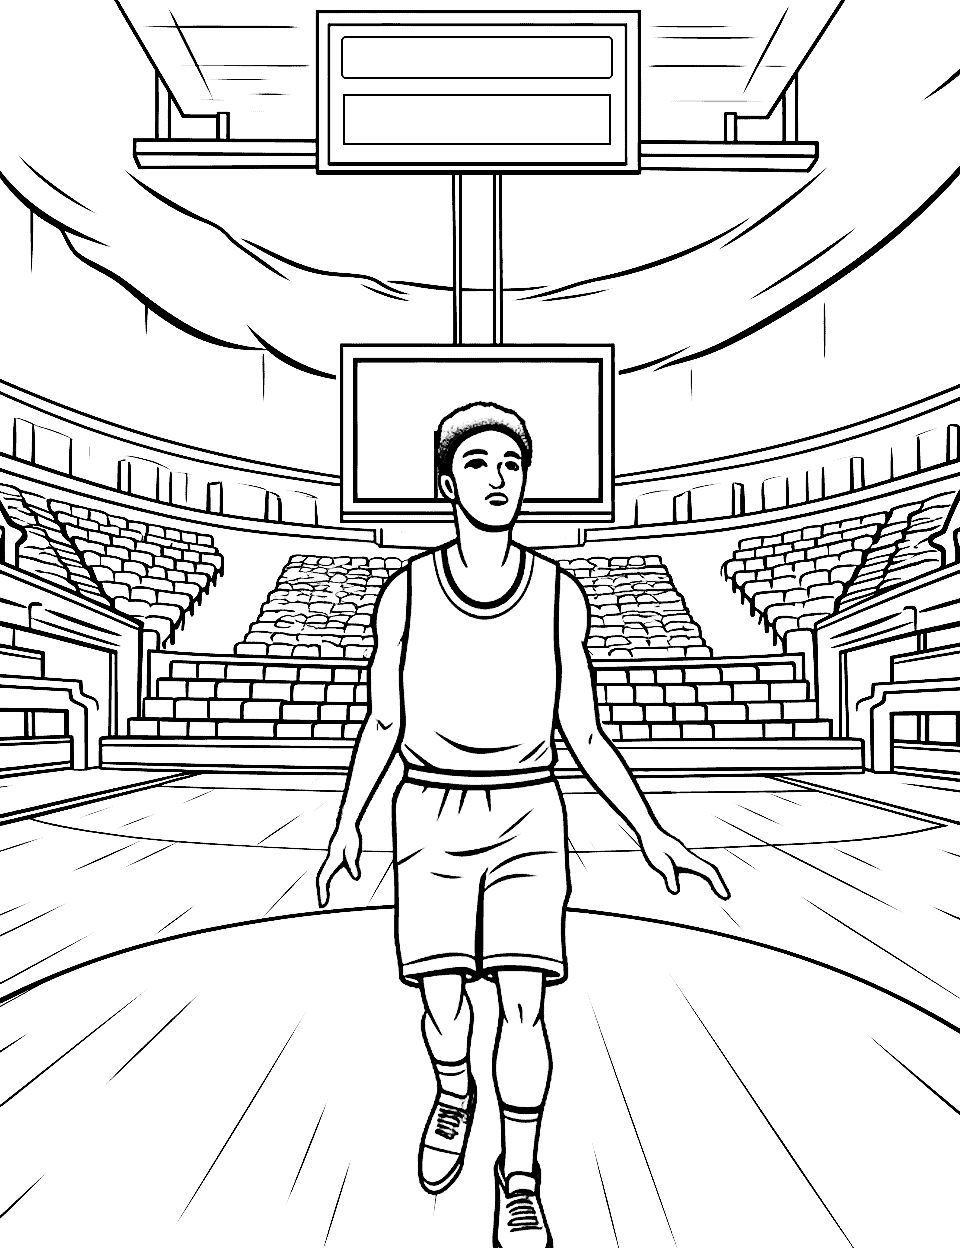 Retro High School Field Basketball Coloring Page - A high schooll vintage gymnasium.